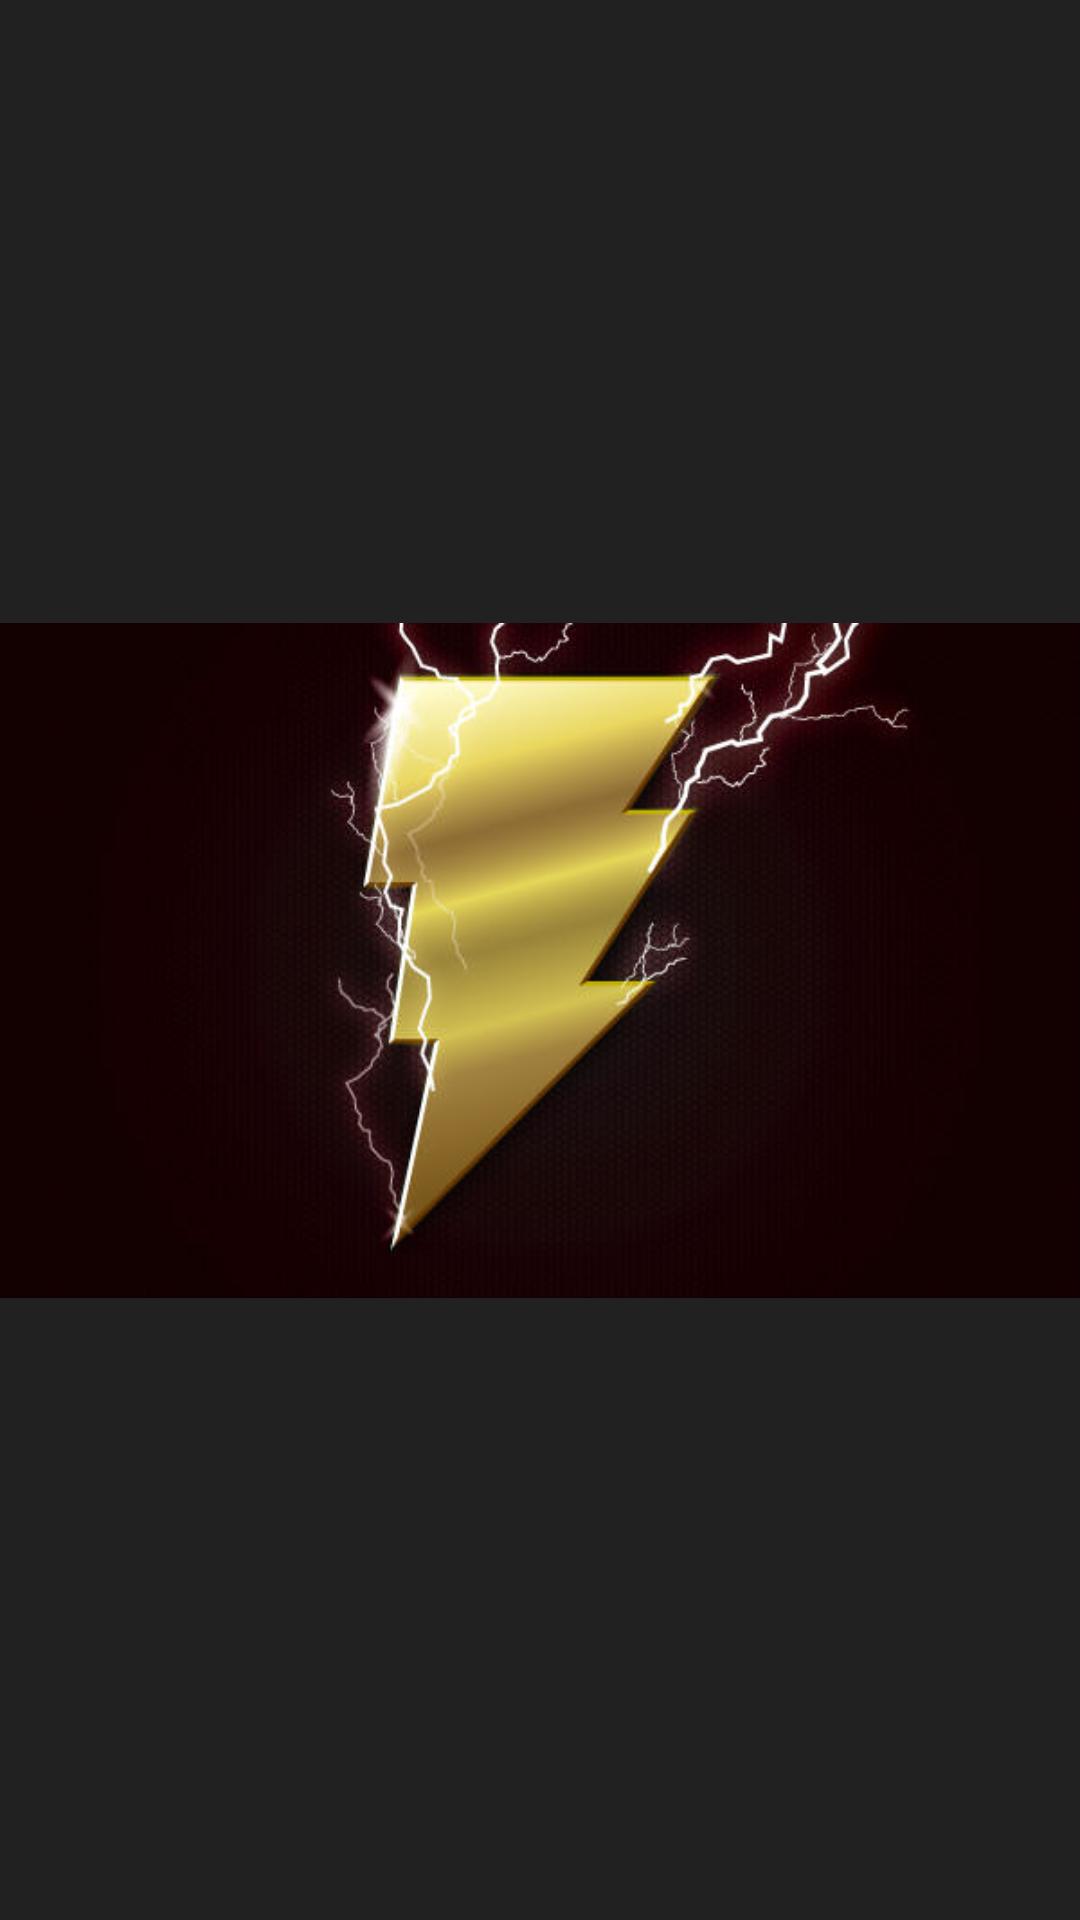 Shazam Superhero Wallpaper HD. 4K Background for Android